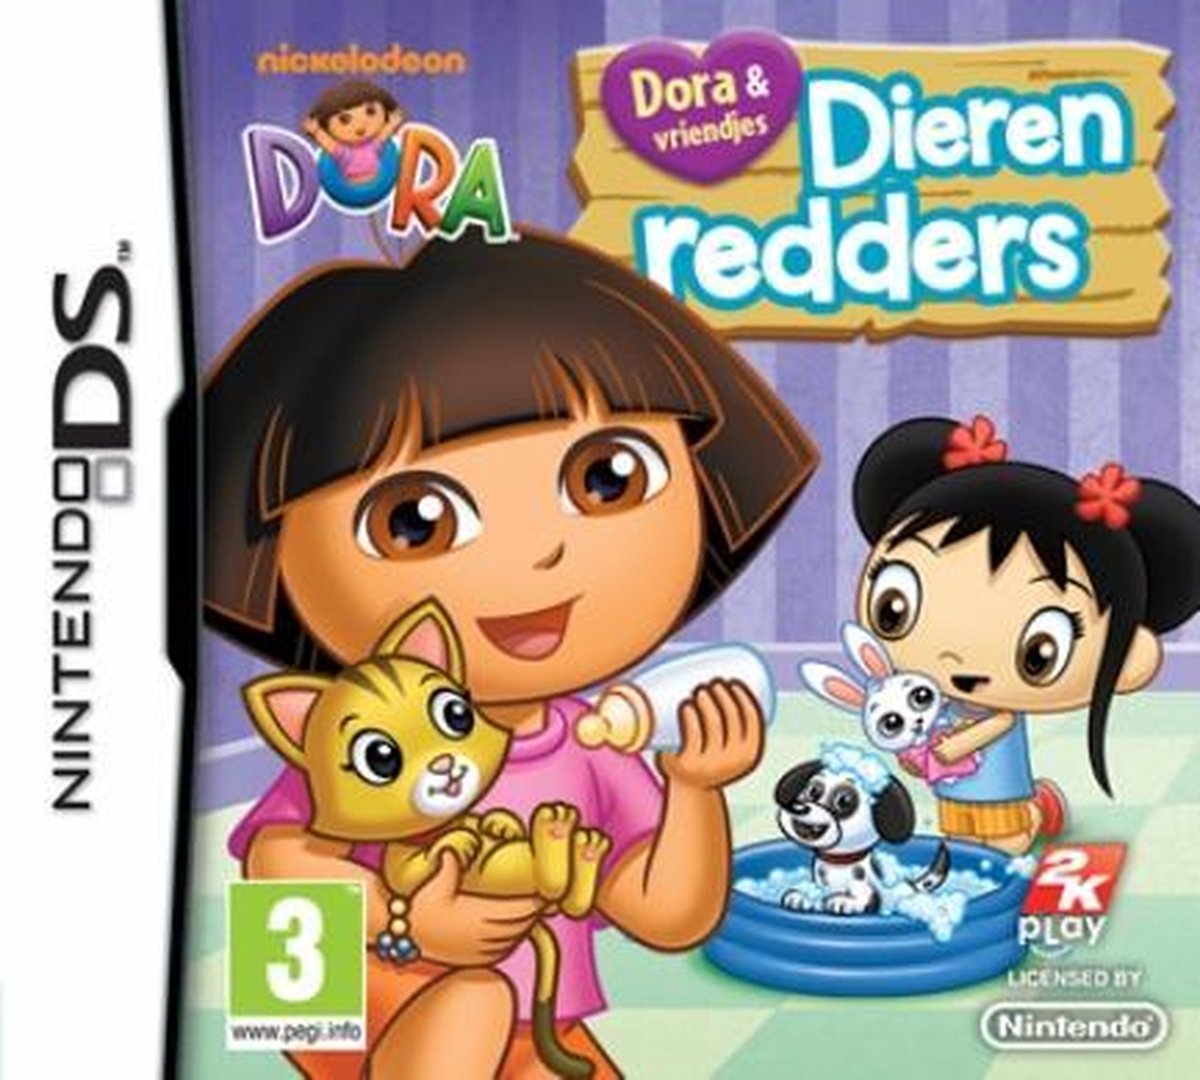 Dora & Vriendjes: Dierenredders | Games | bol.com